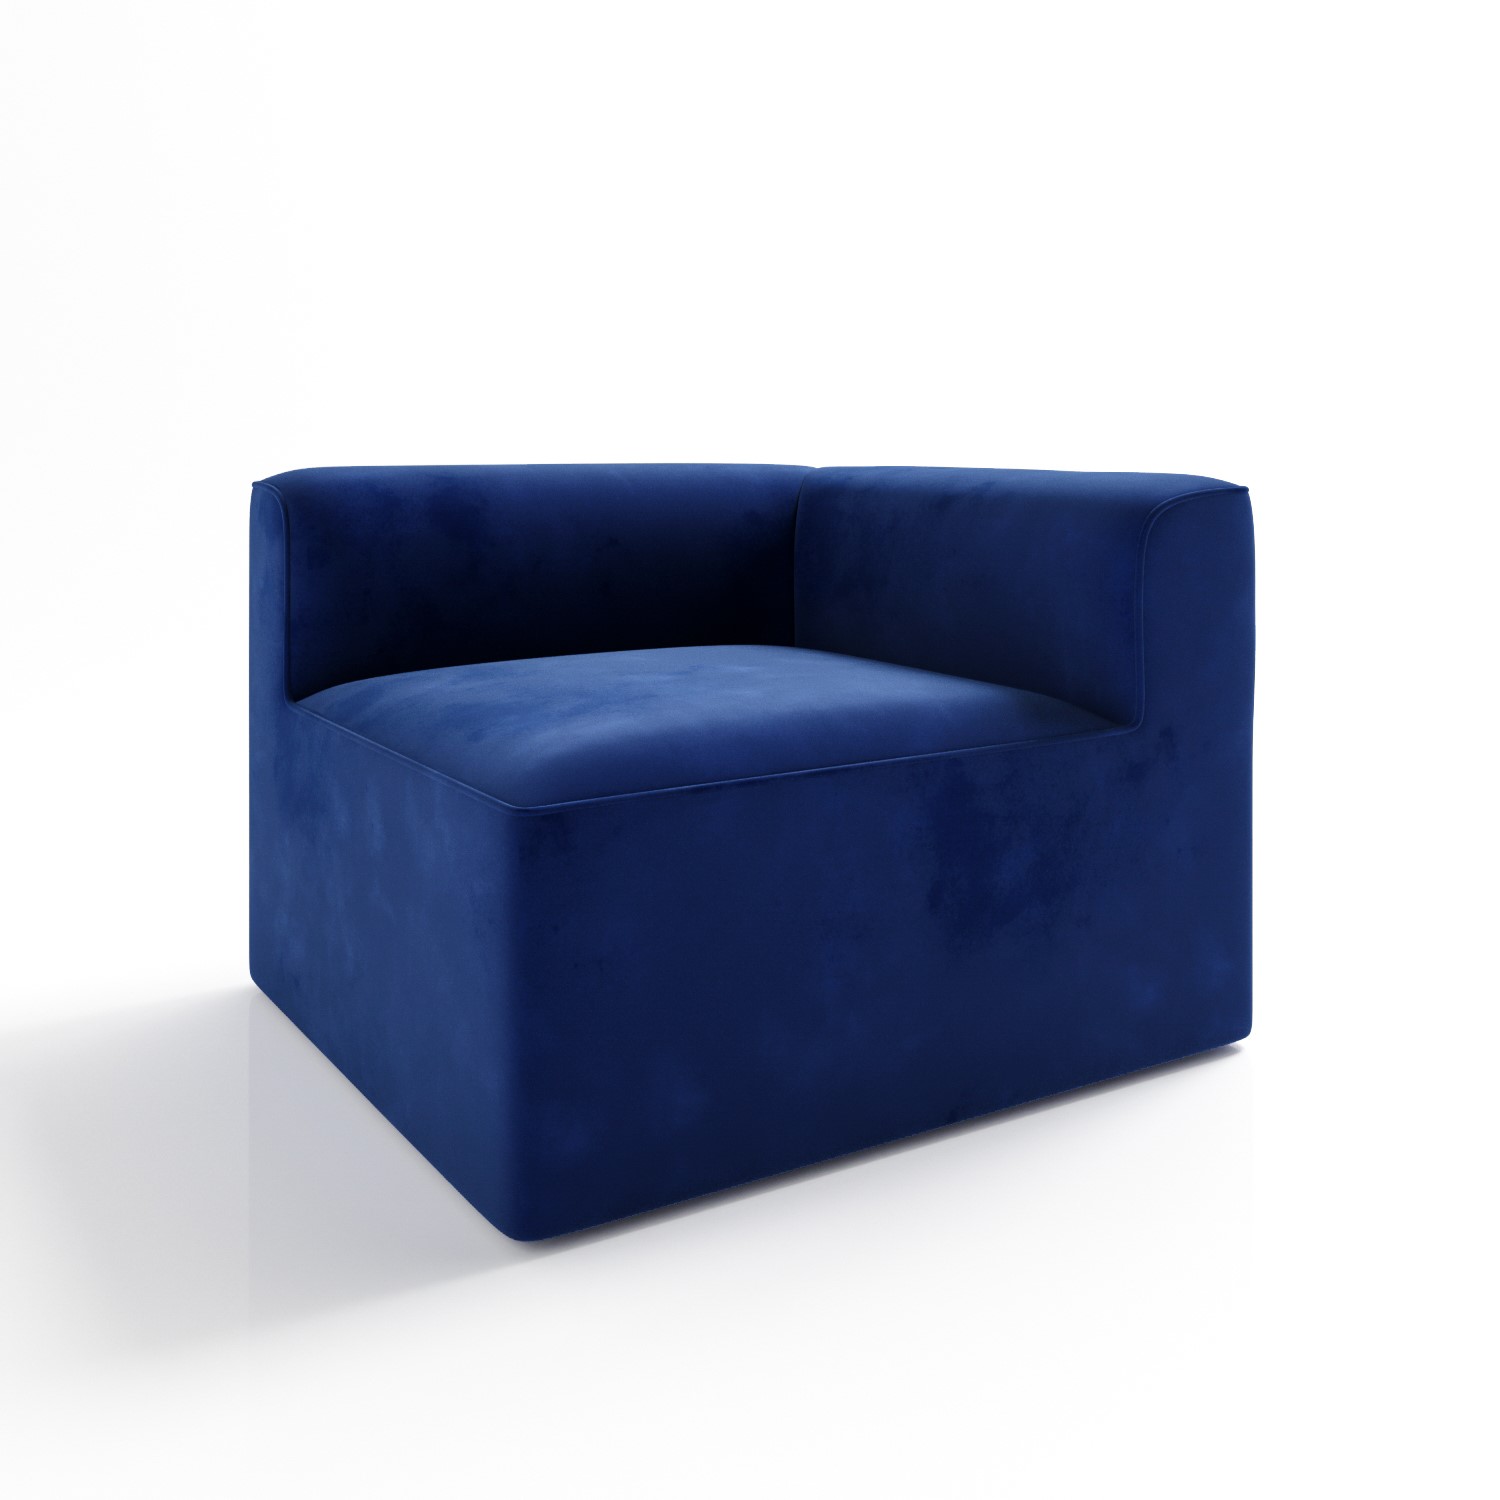 Read more about Navy velvet right corner section modular sofa piece hendrix